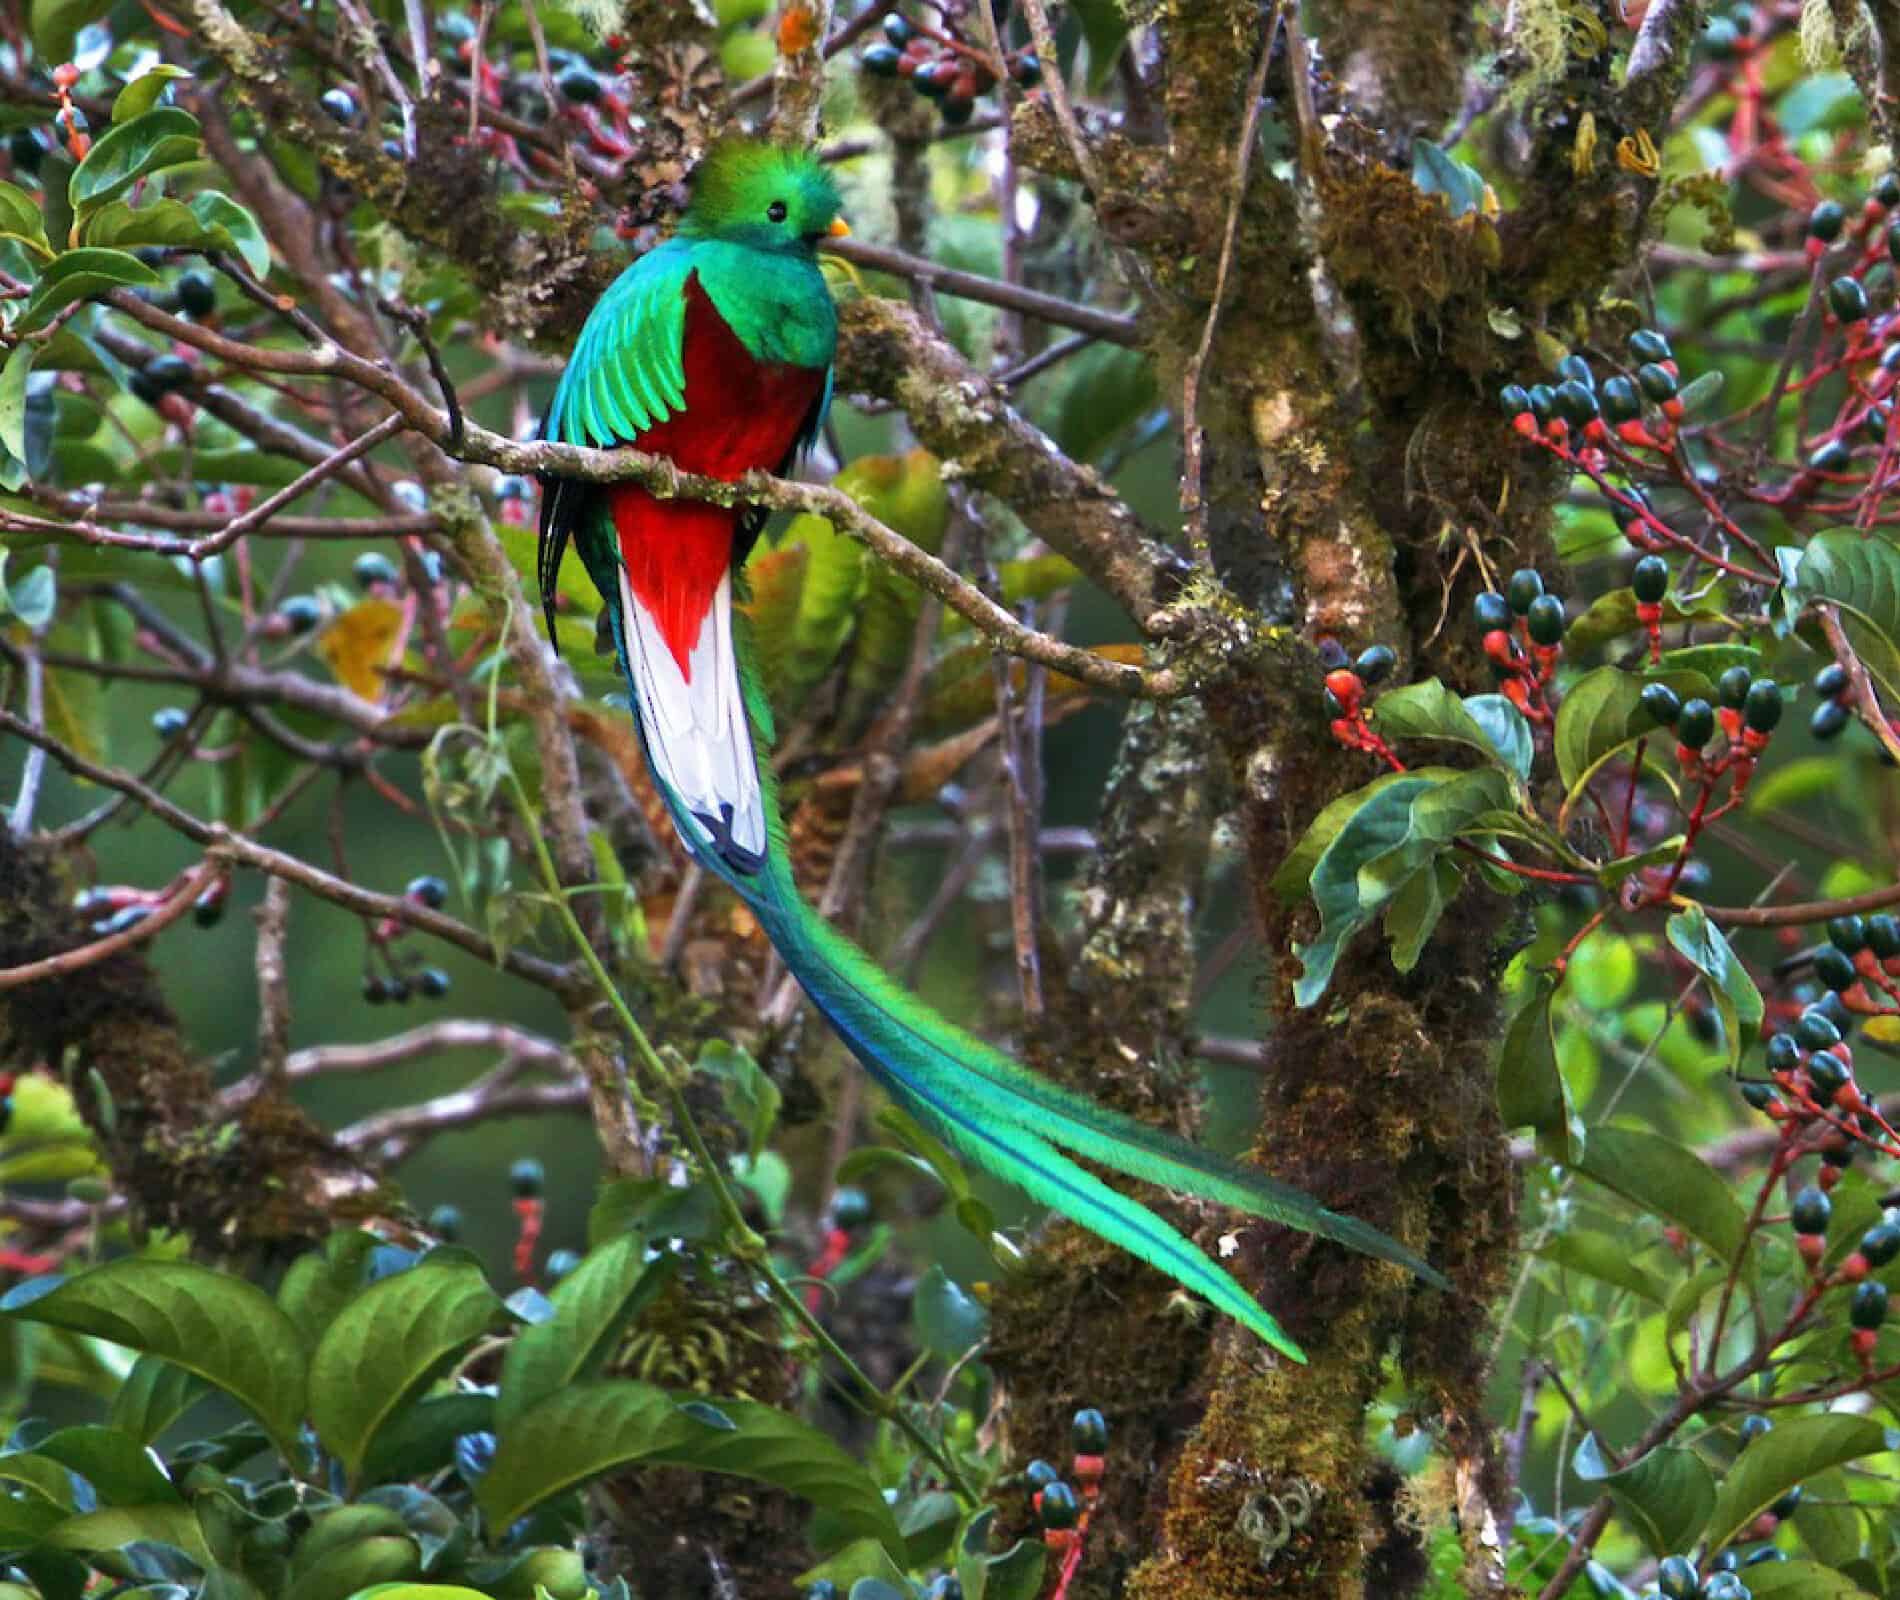 The Quetzal in Costa Rica, Nest